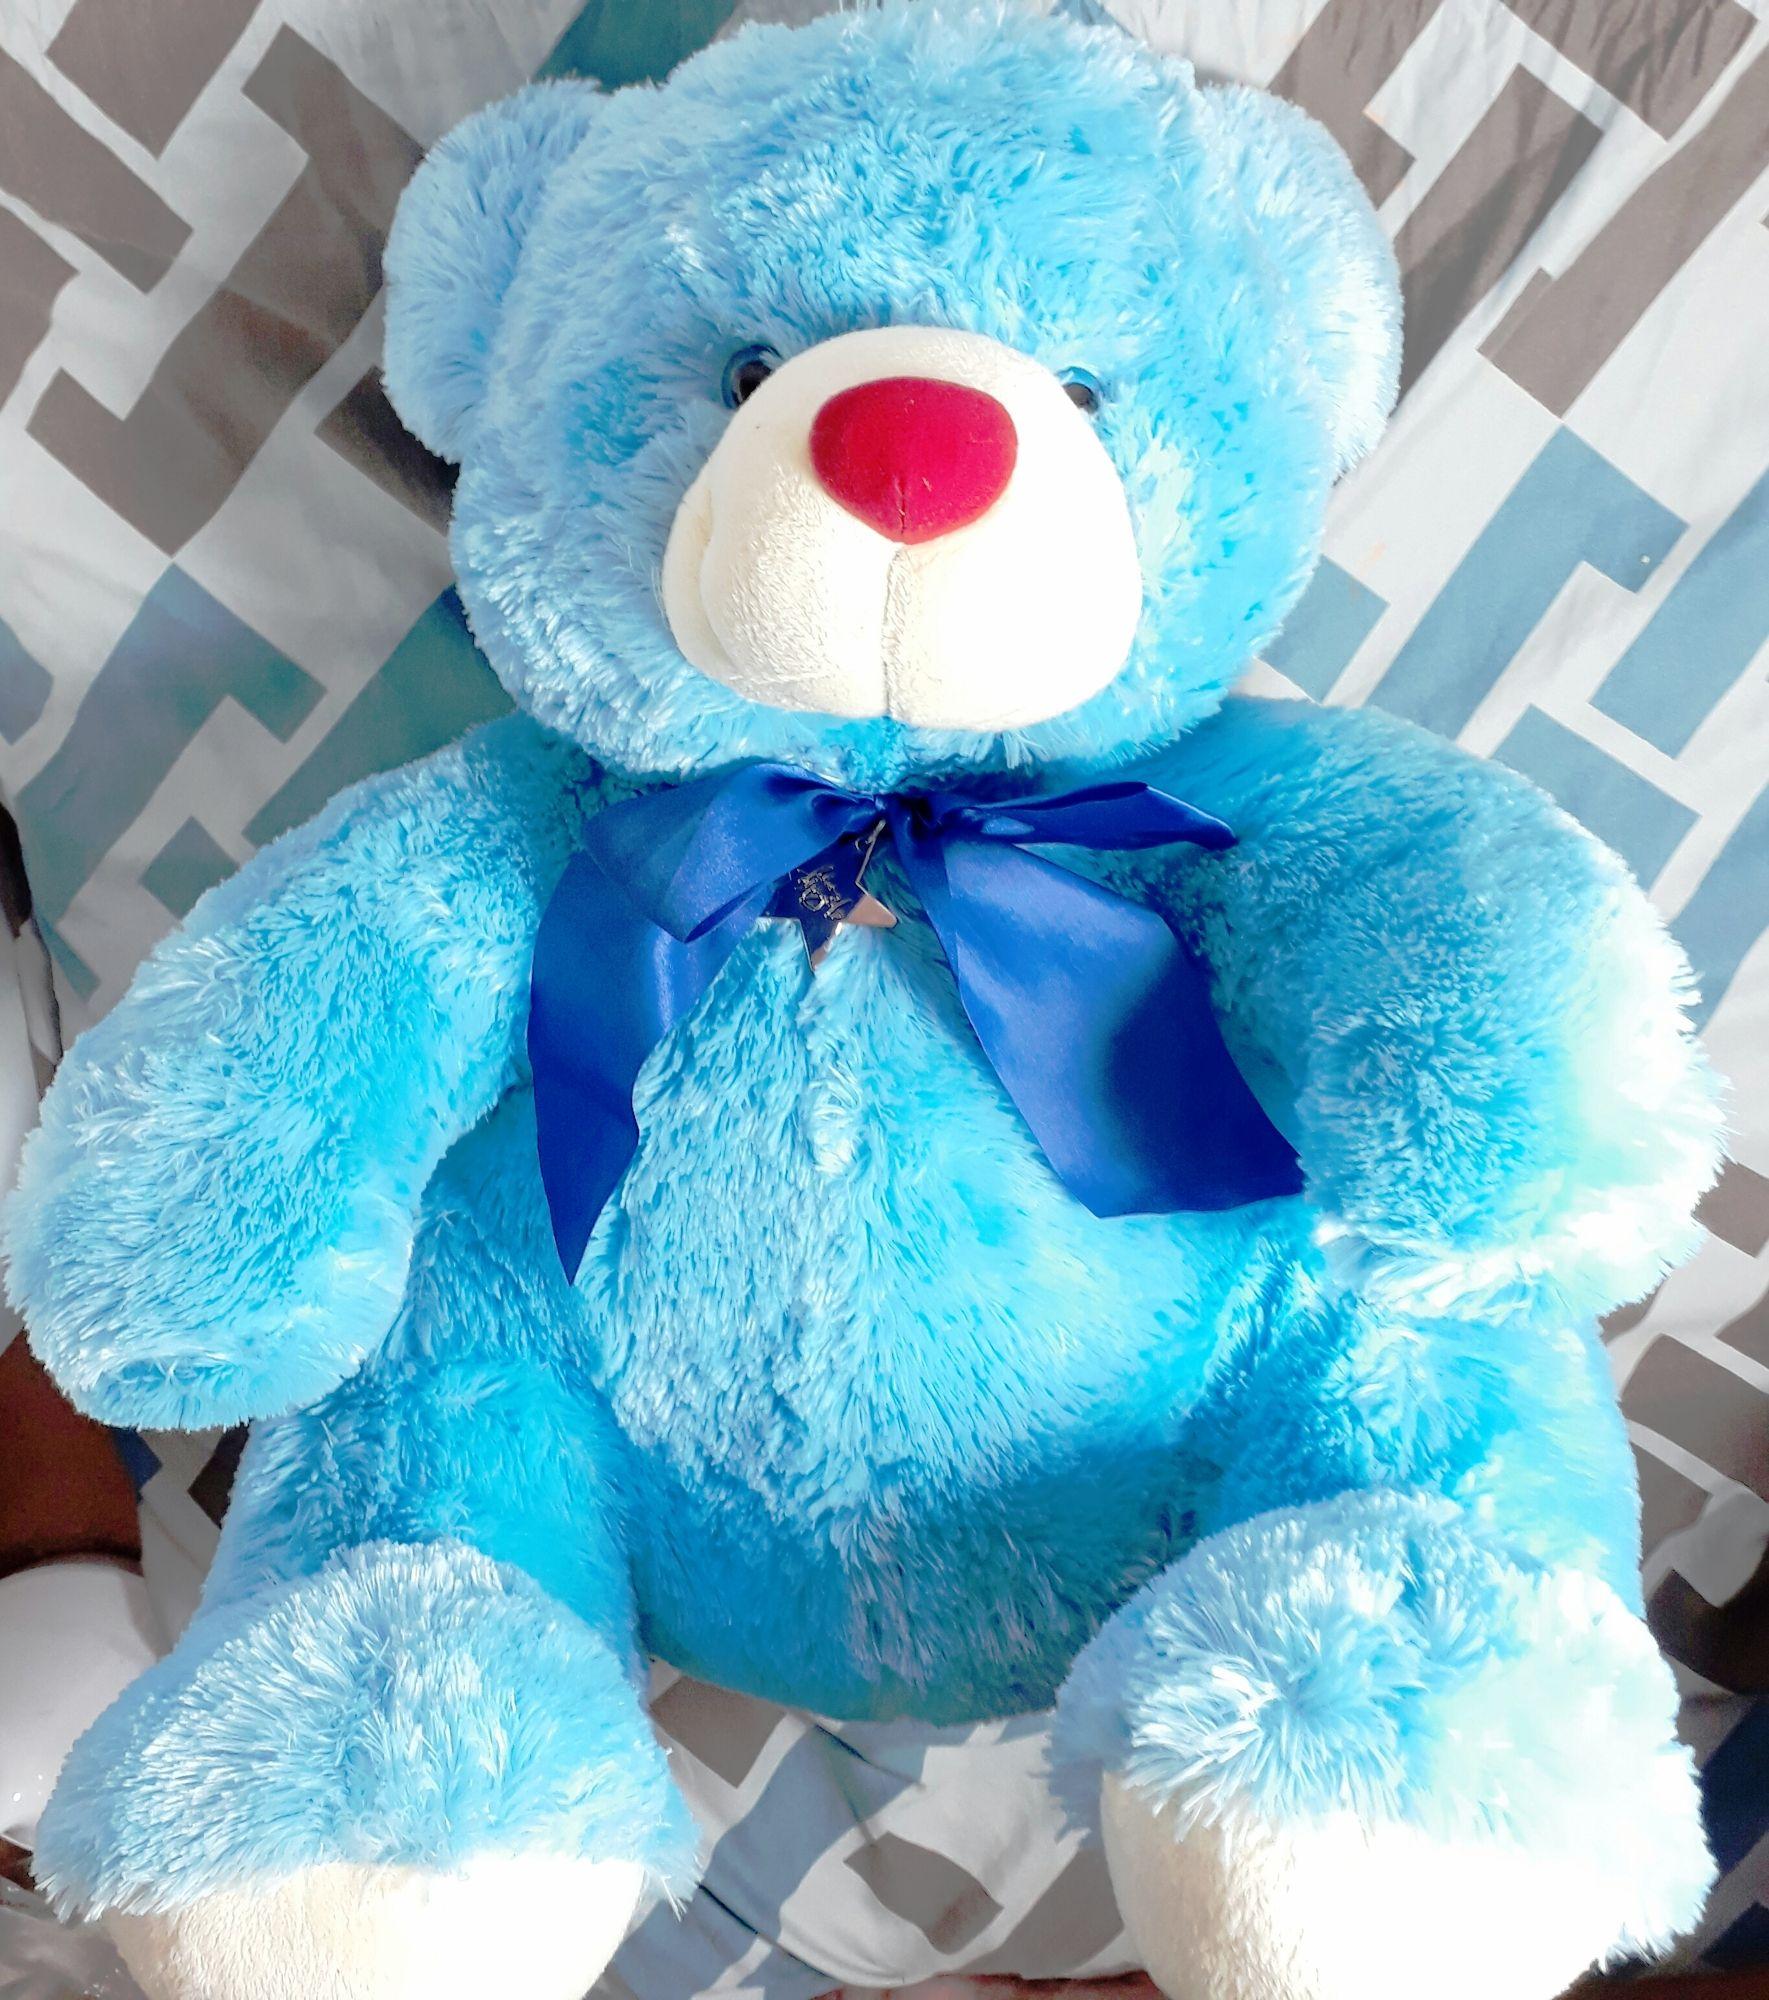 blue magic life size teddy bear price